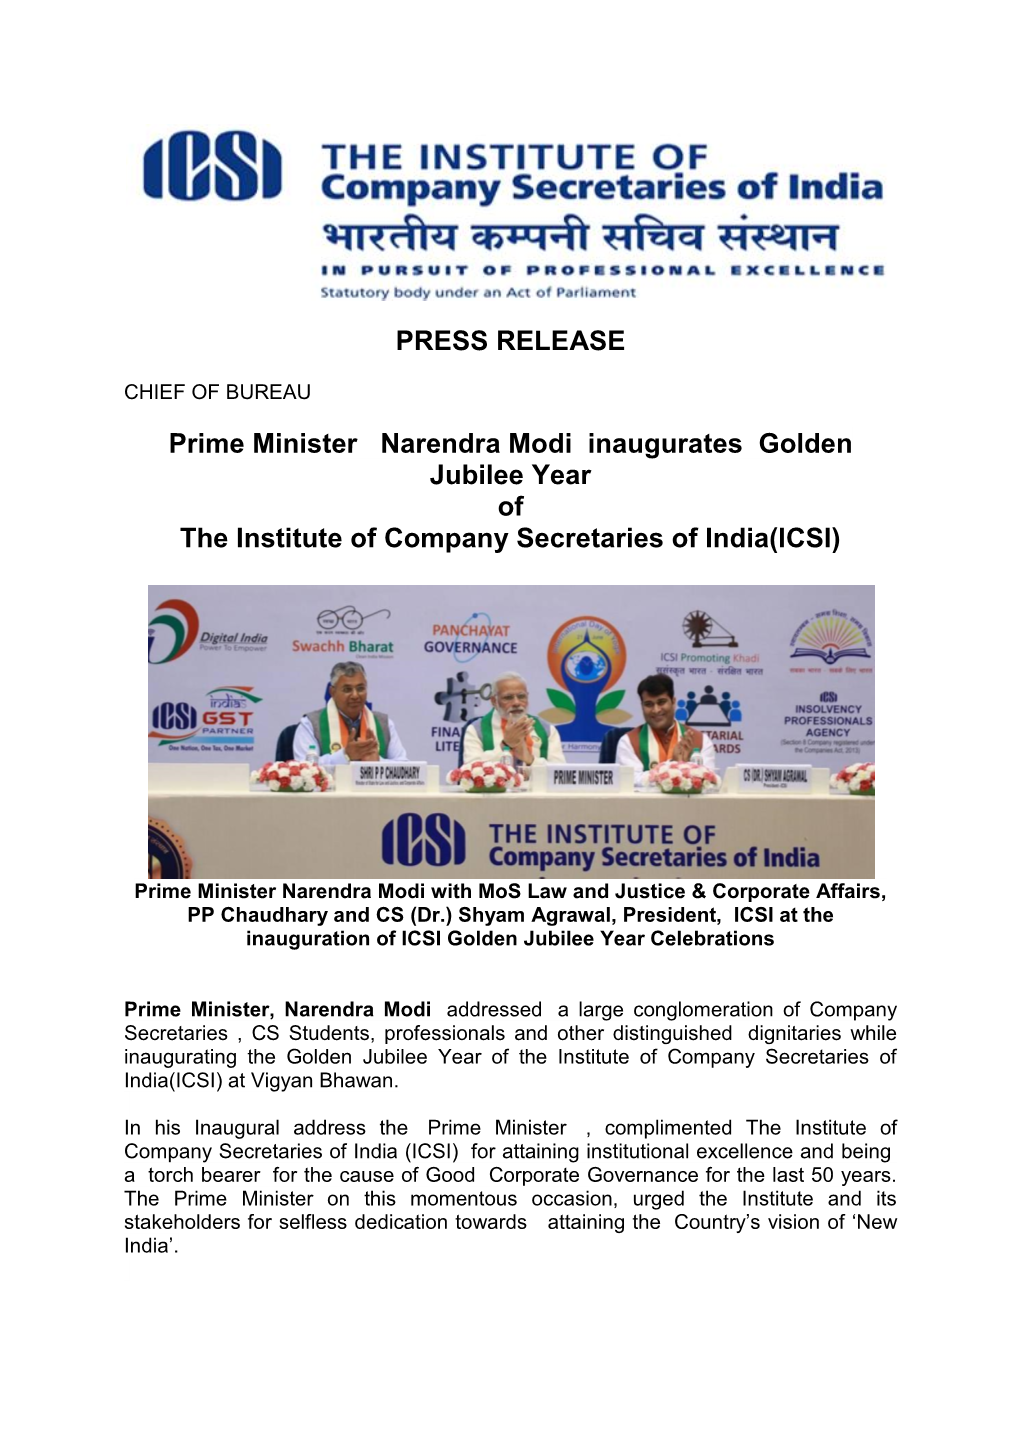 Prime Minister Narendra Modi Inaugurates Golden Jubilee Year of the Institute of Company Secretaries of India(ICSI)